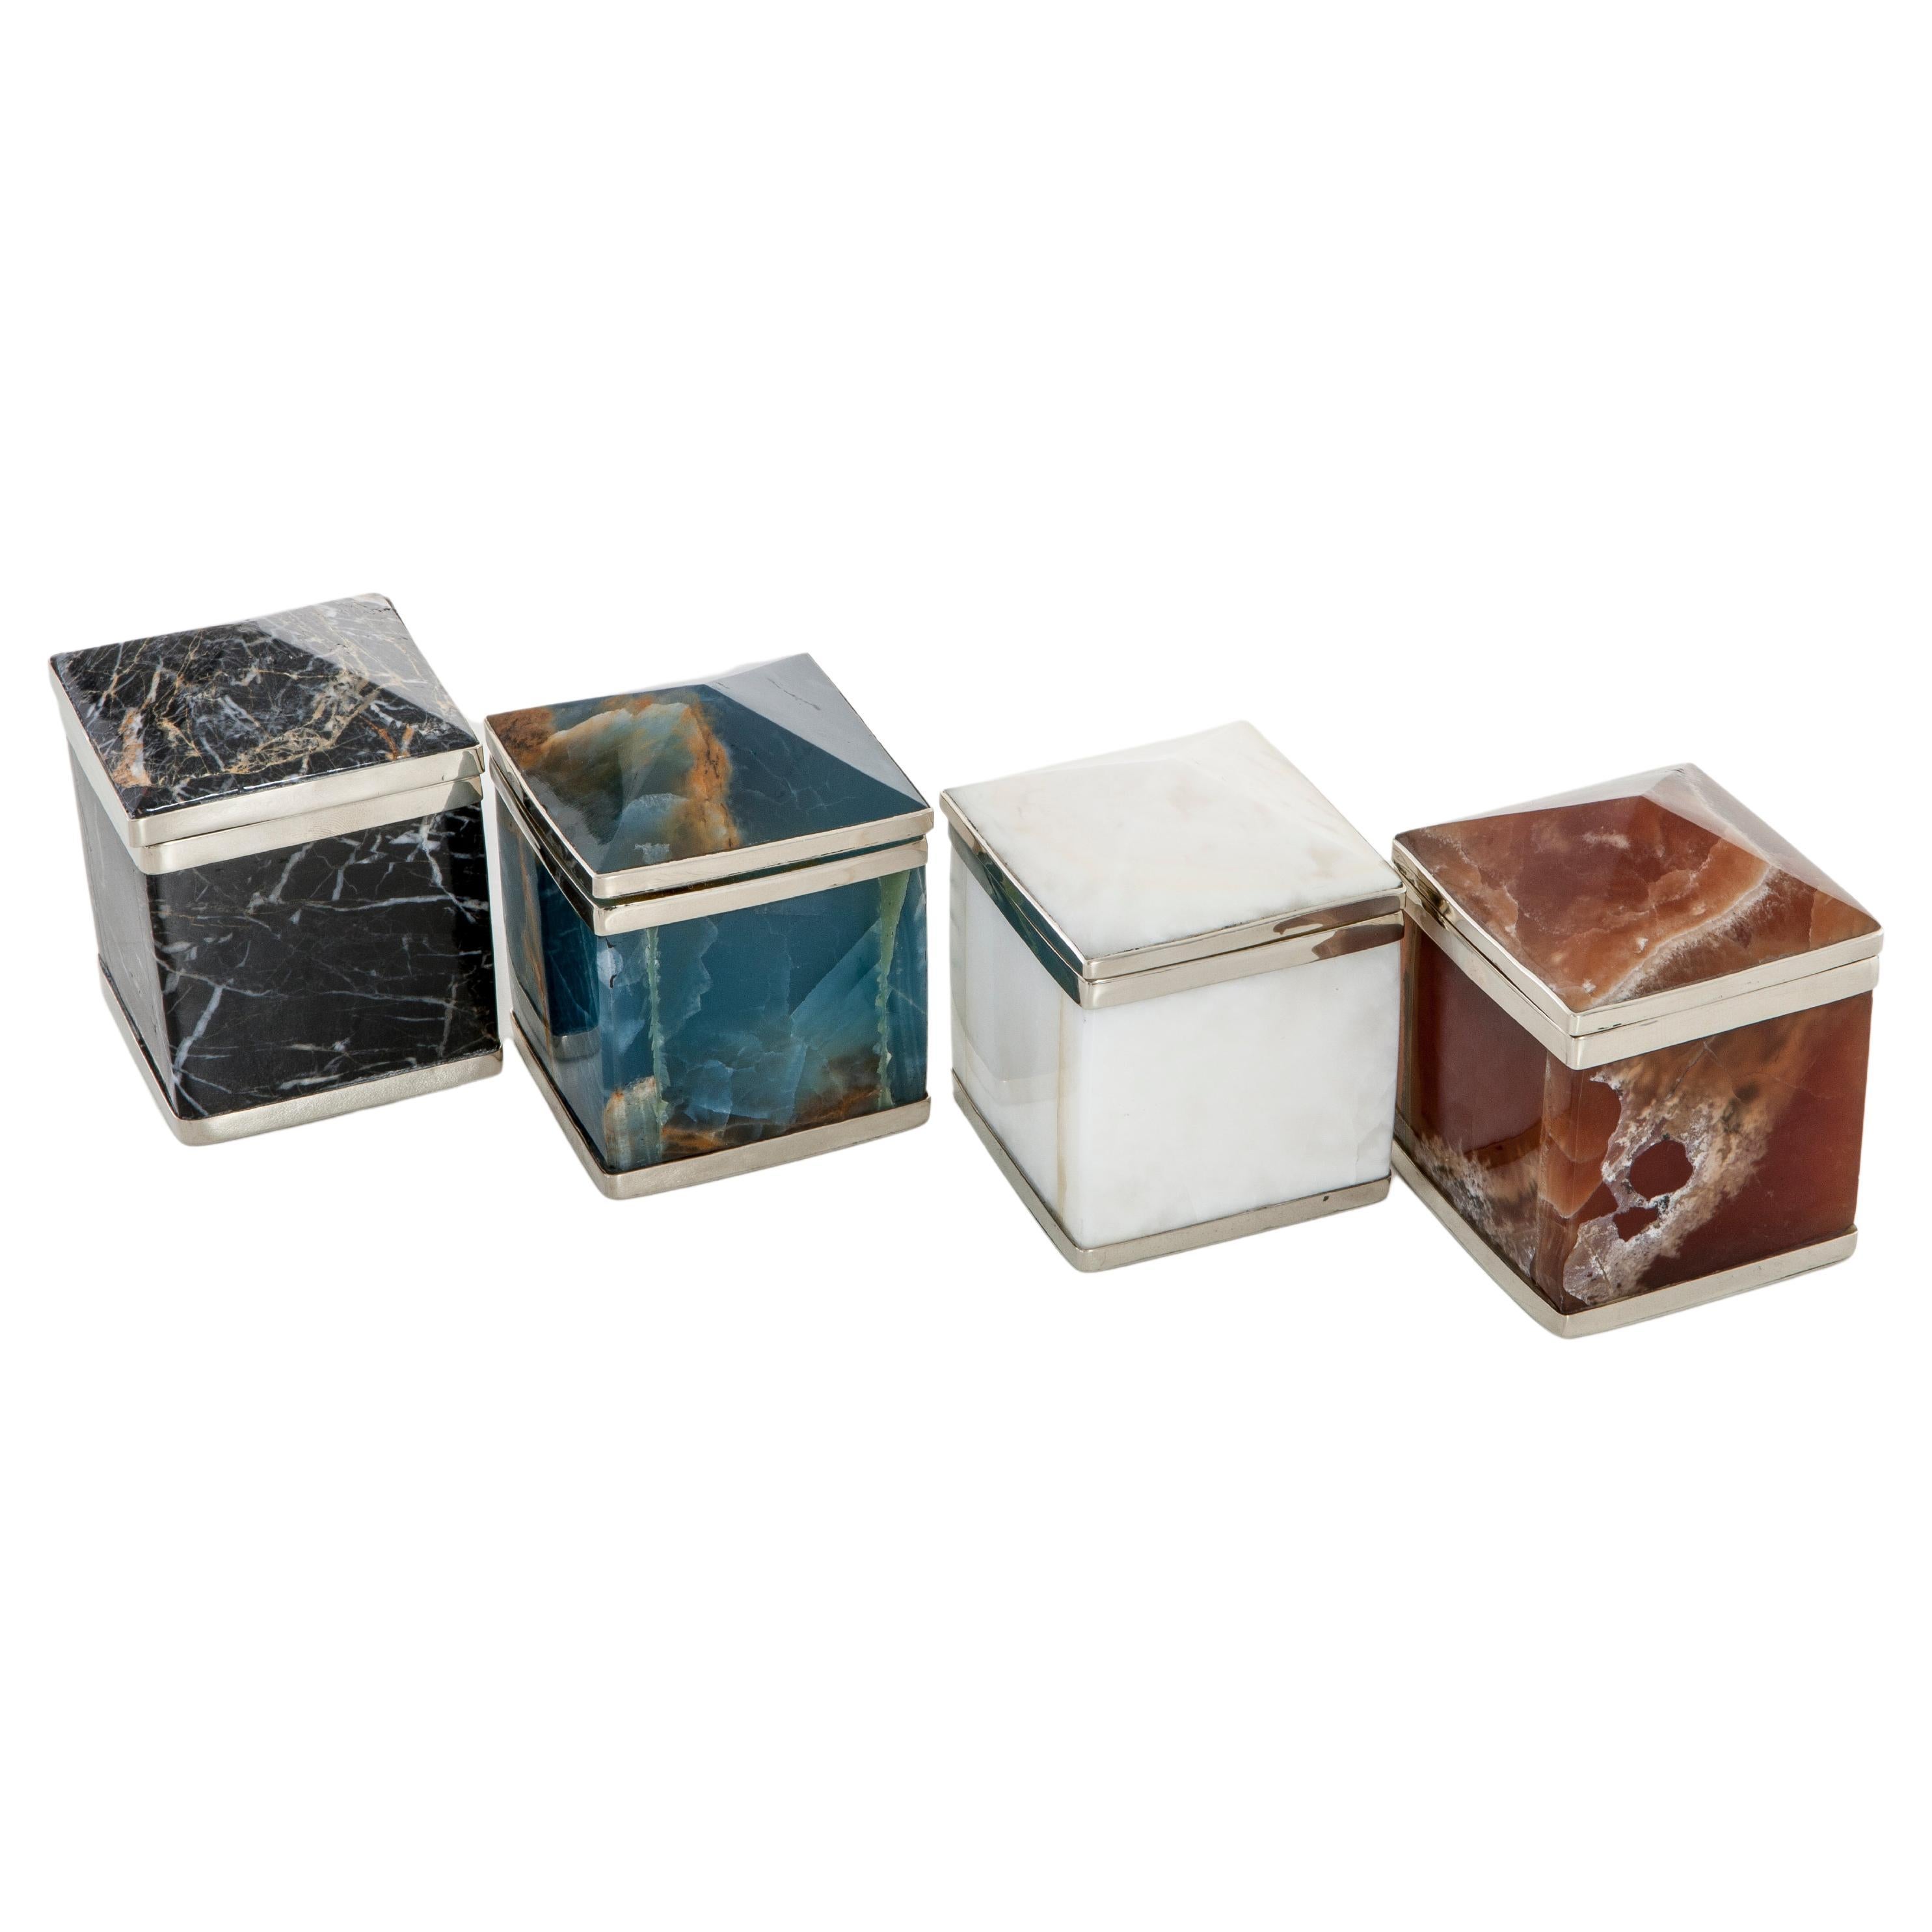 Ensemble de mini-boîtes Tronador moyennes, pierre d'onyx et alpaga argentée